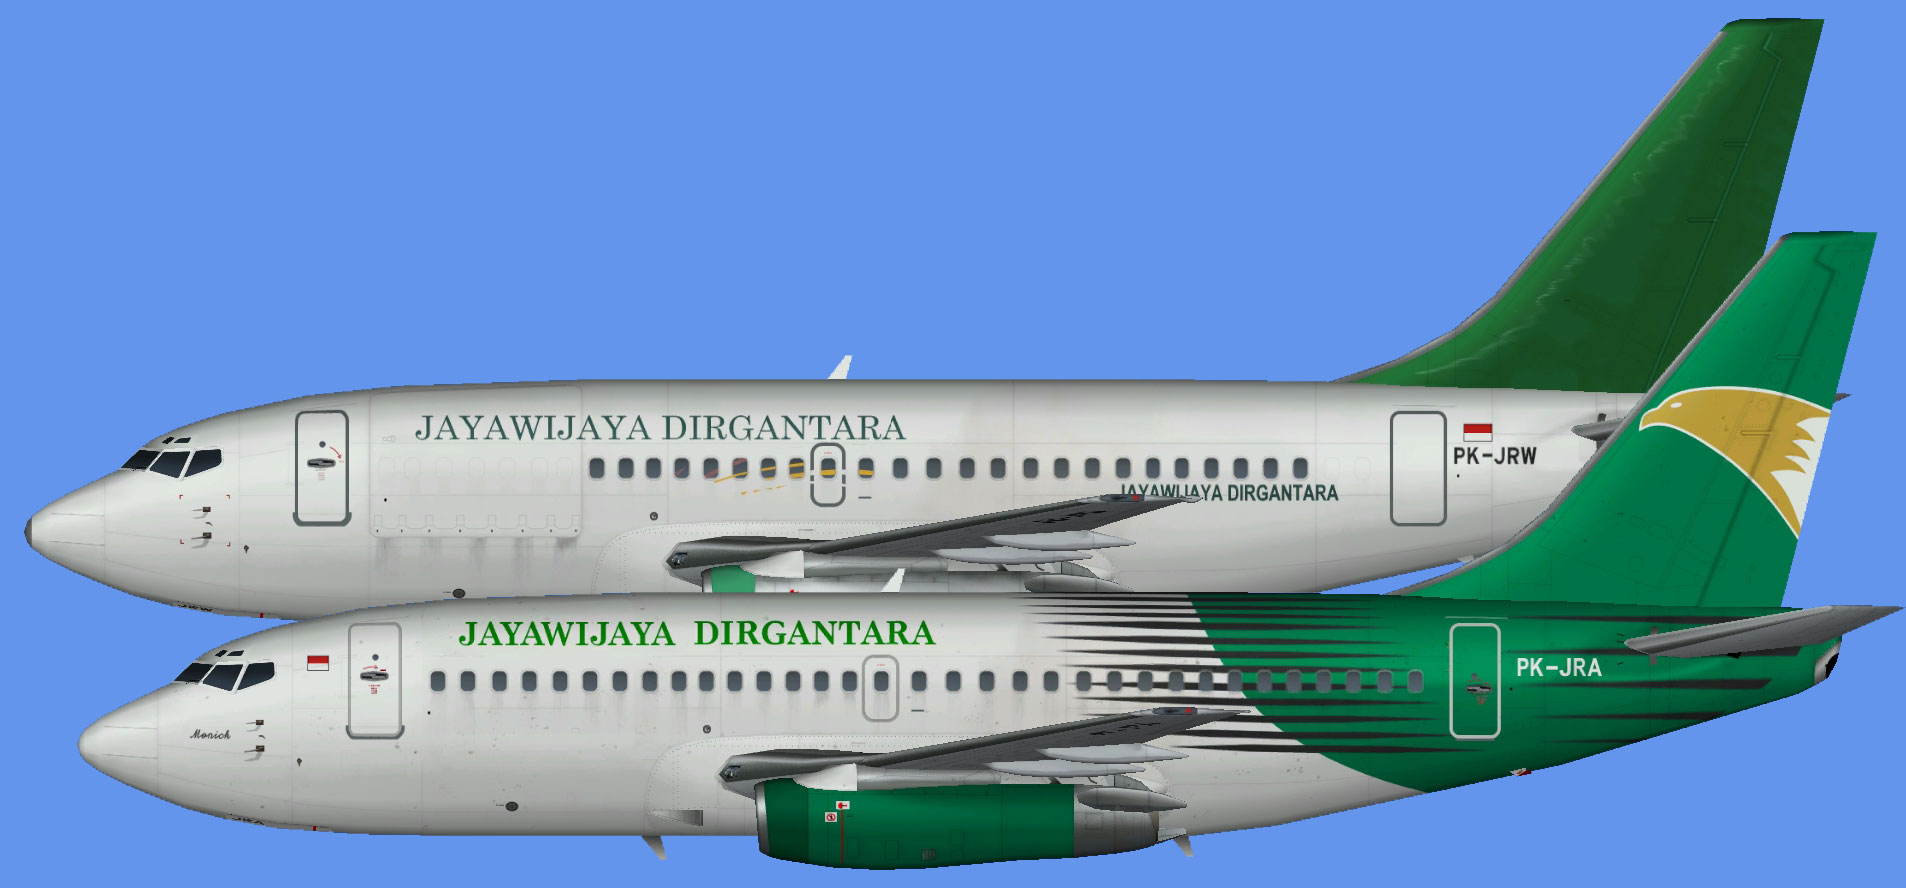 Jayawijaya Dirgantara Boeing 737-200